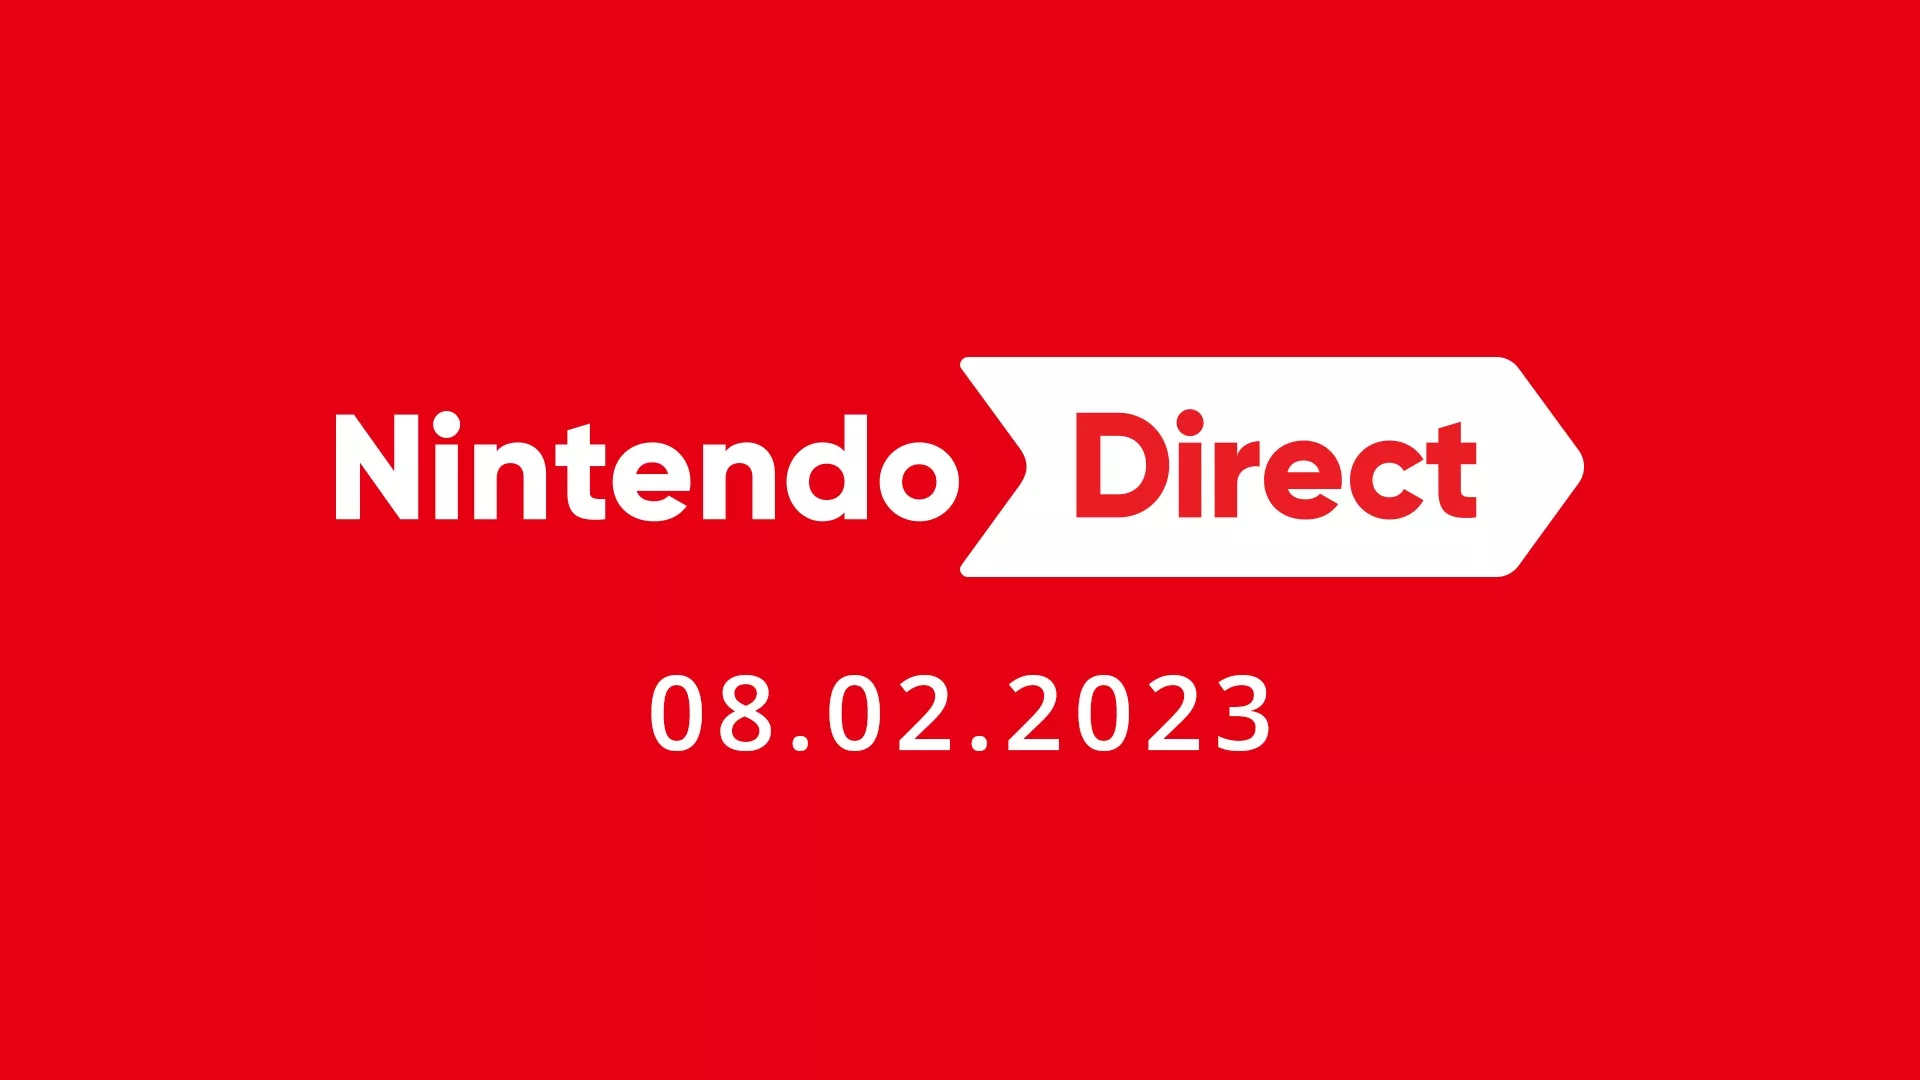 Nintendo Direct morgen am 8. Februar um 23 Uhr Heropic